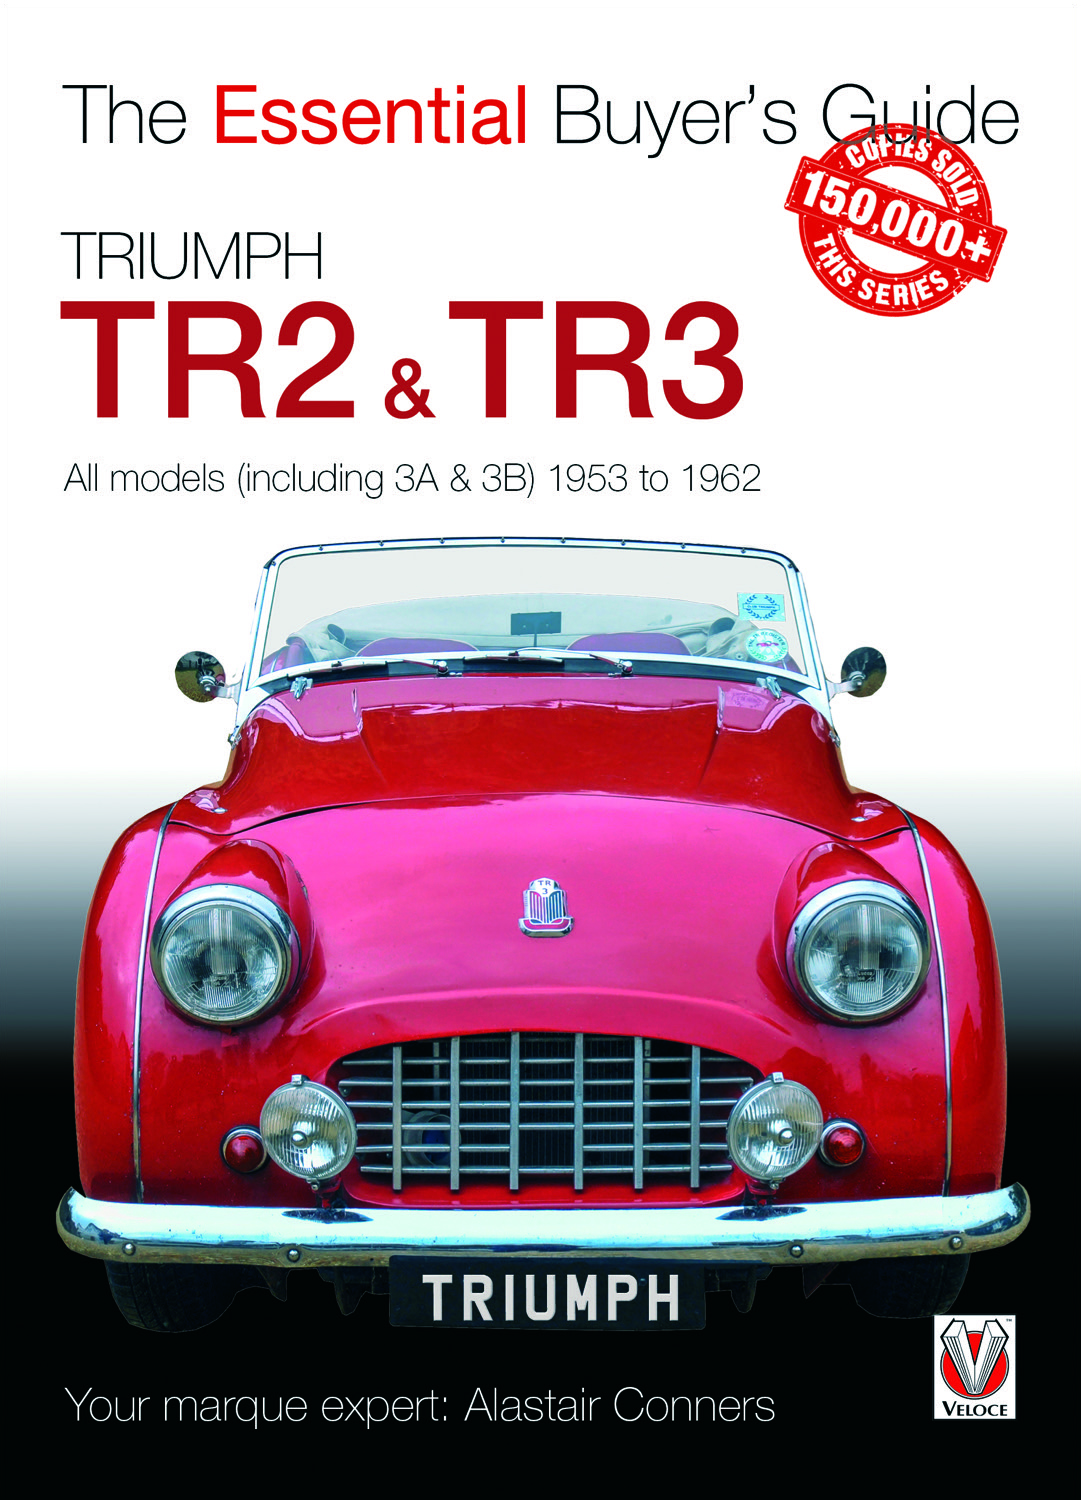 Triumph TR2 & TR3 – The Essential Buyer